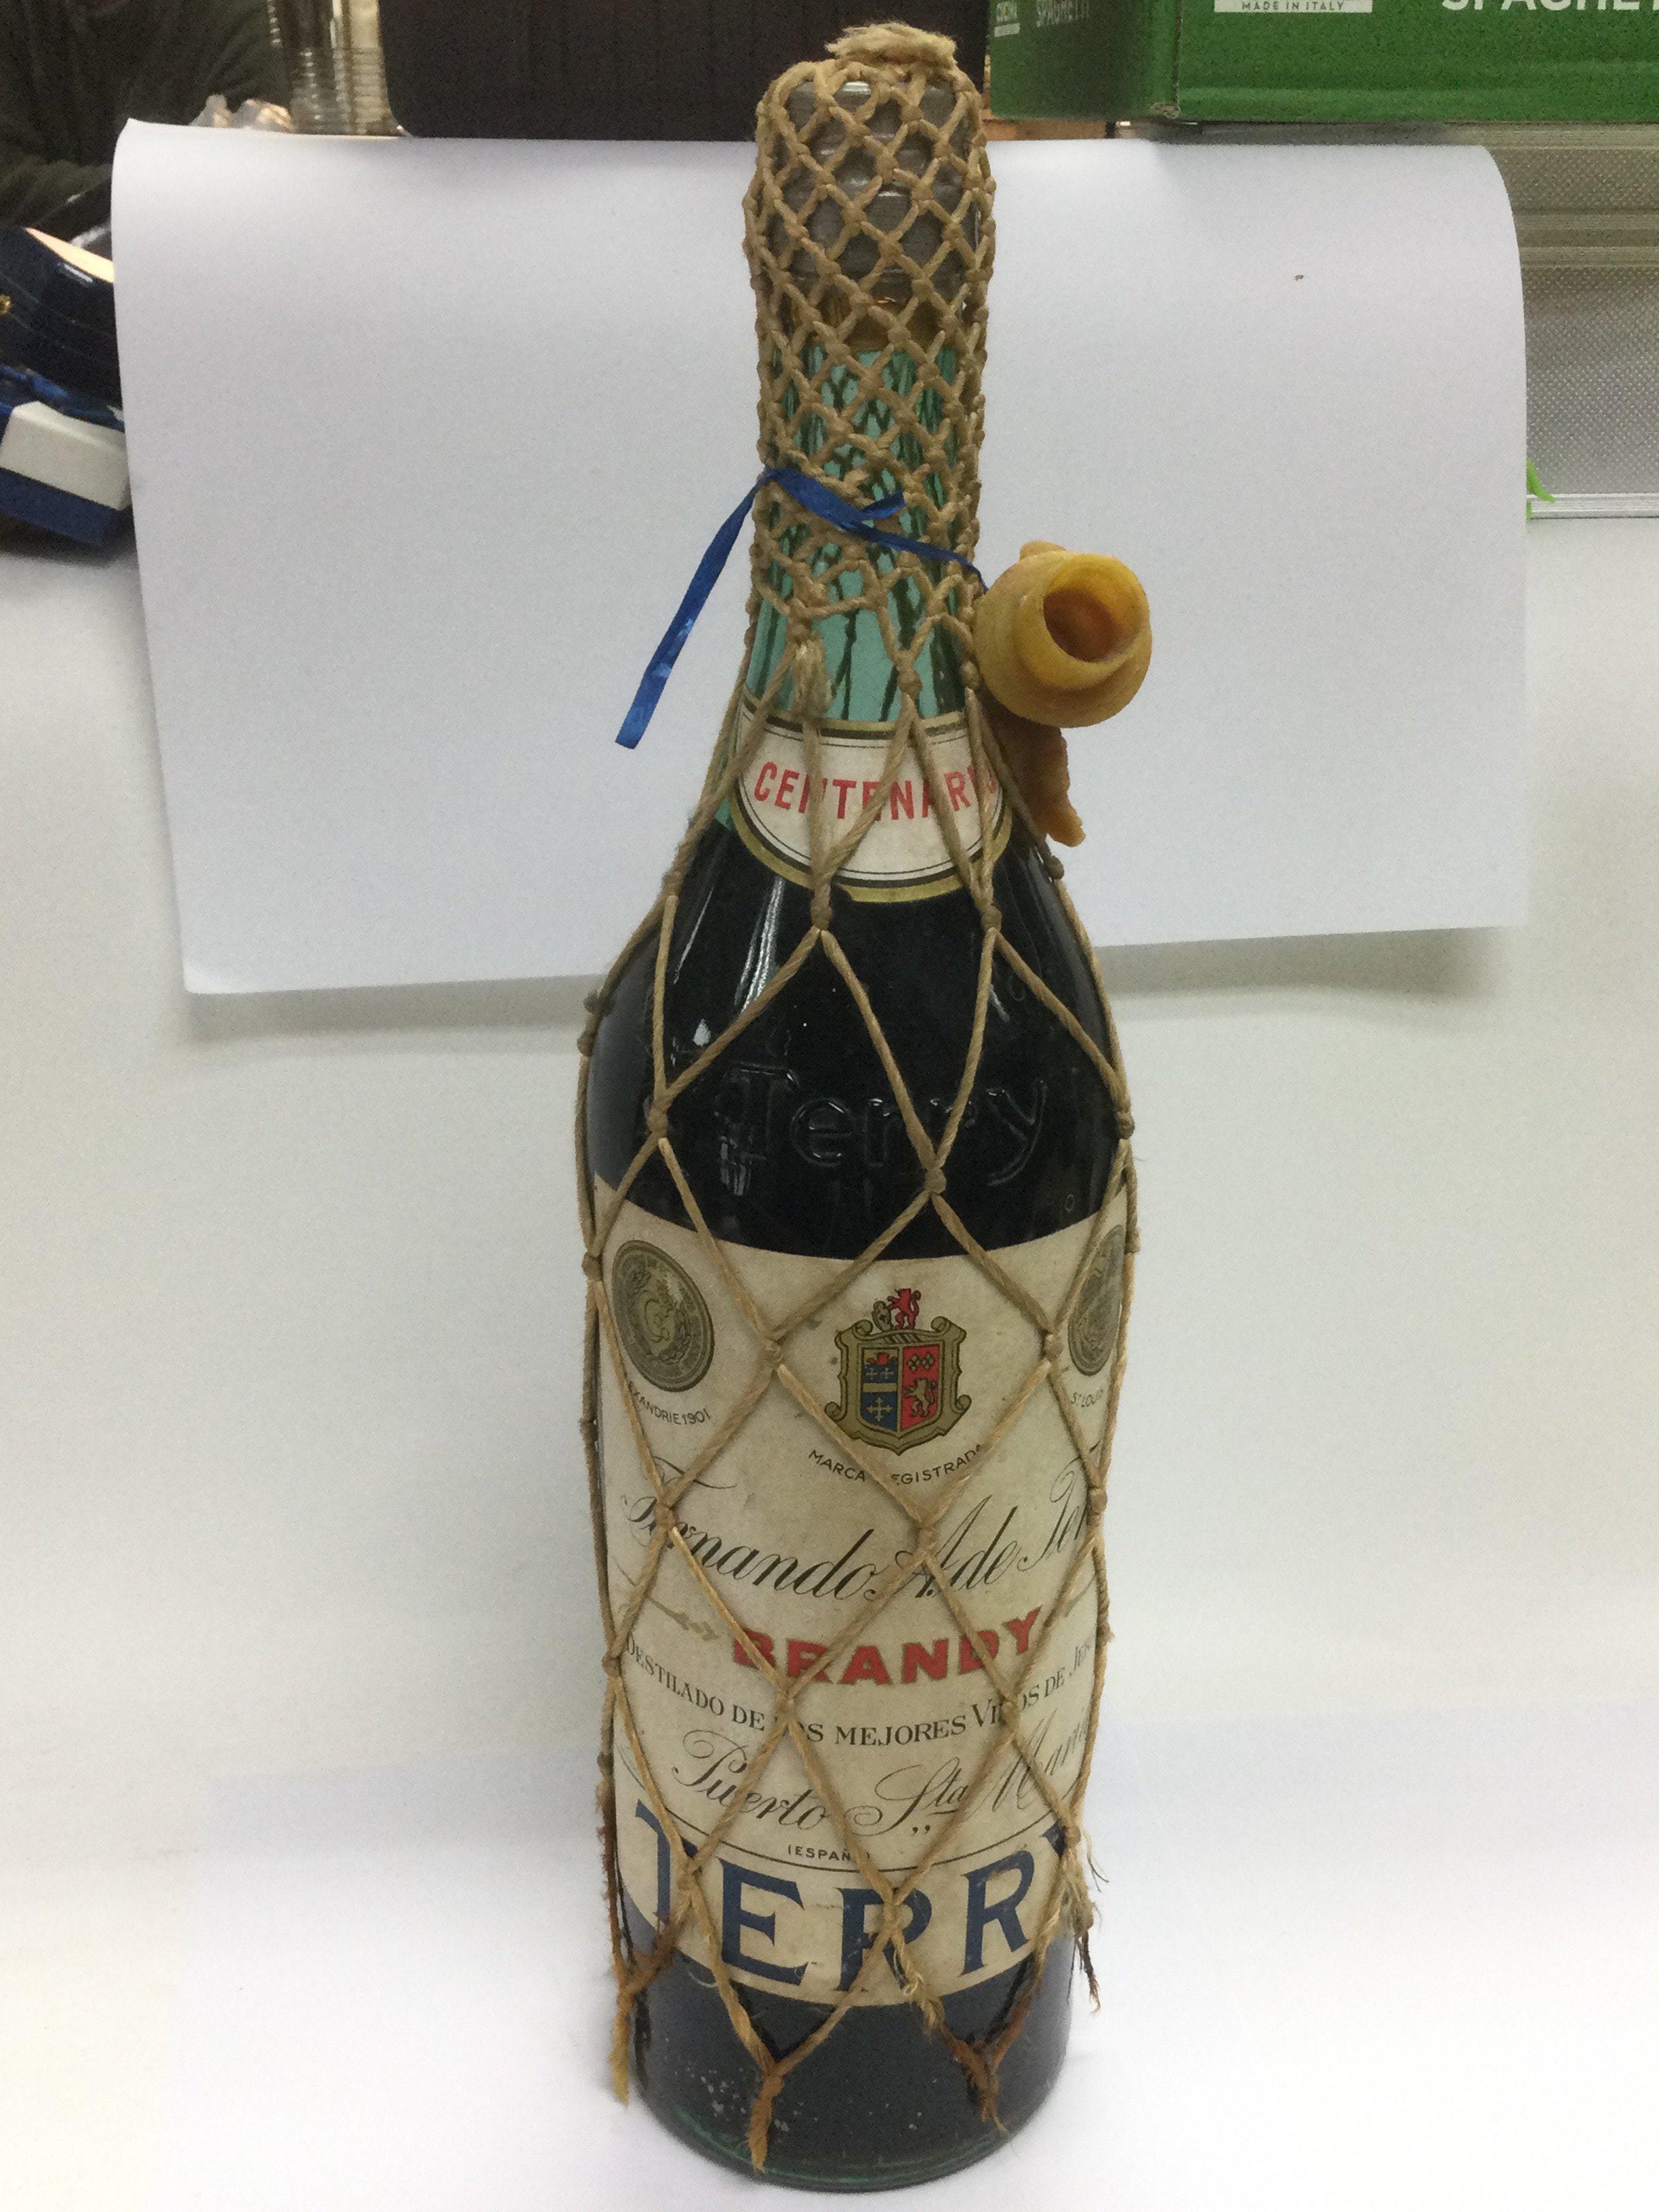 A circa 1940s 3.75l bottle of Terry Brandy. Shippi